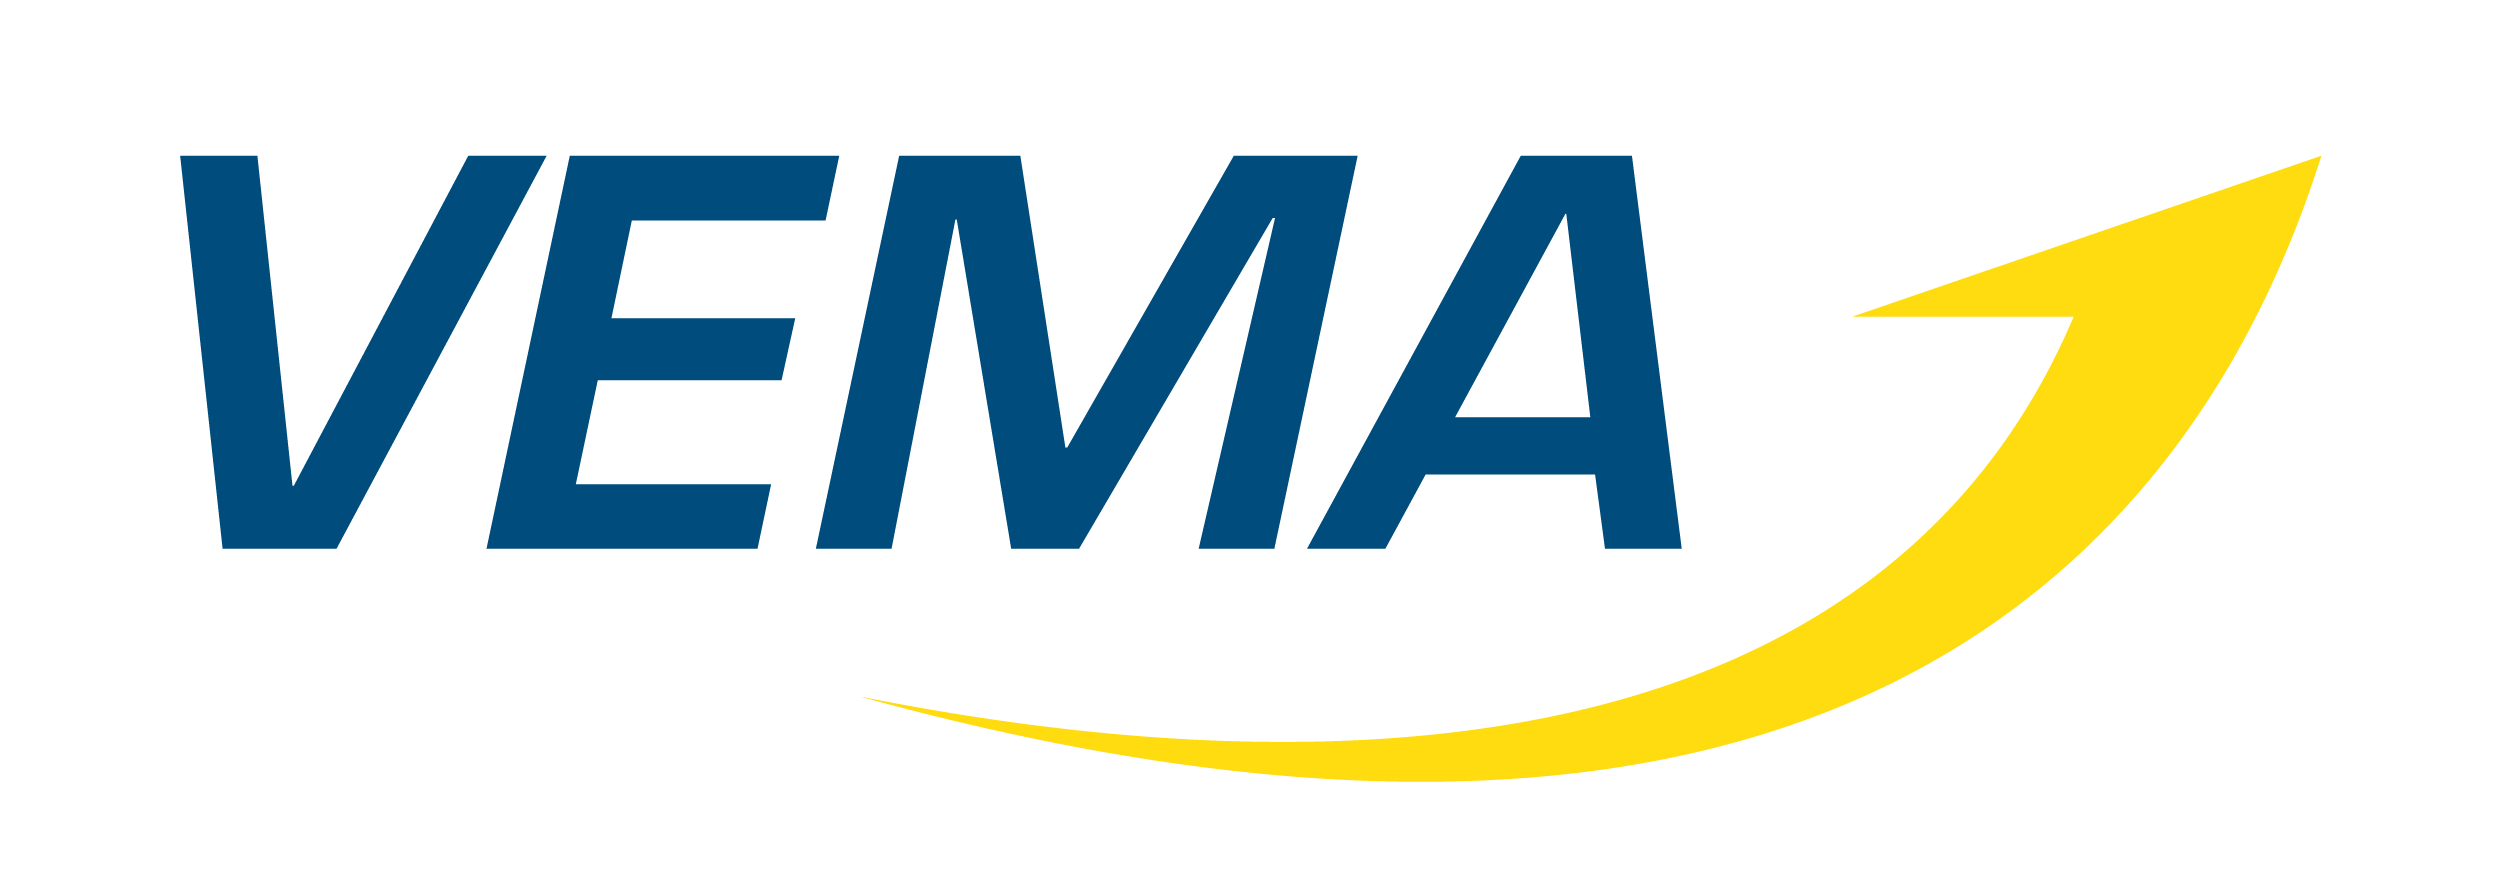 igvm logo